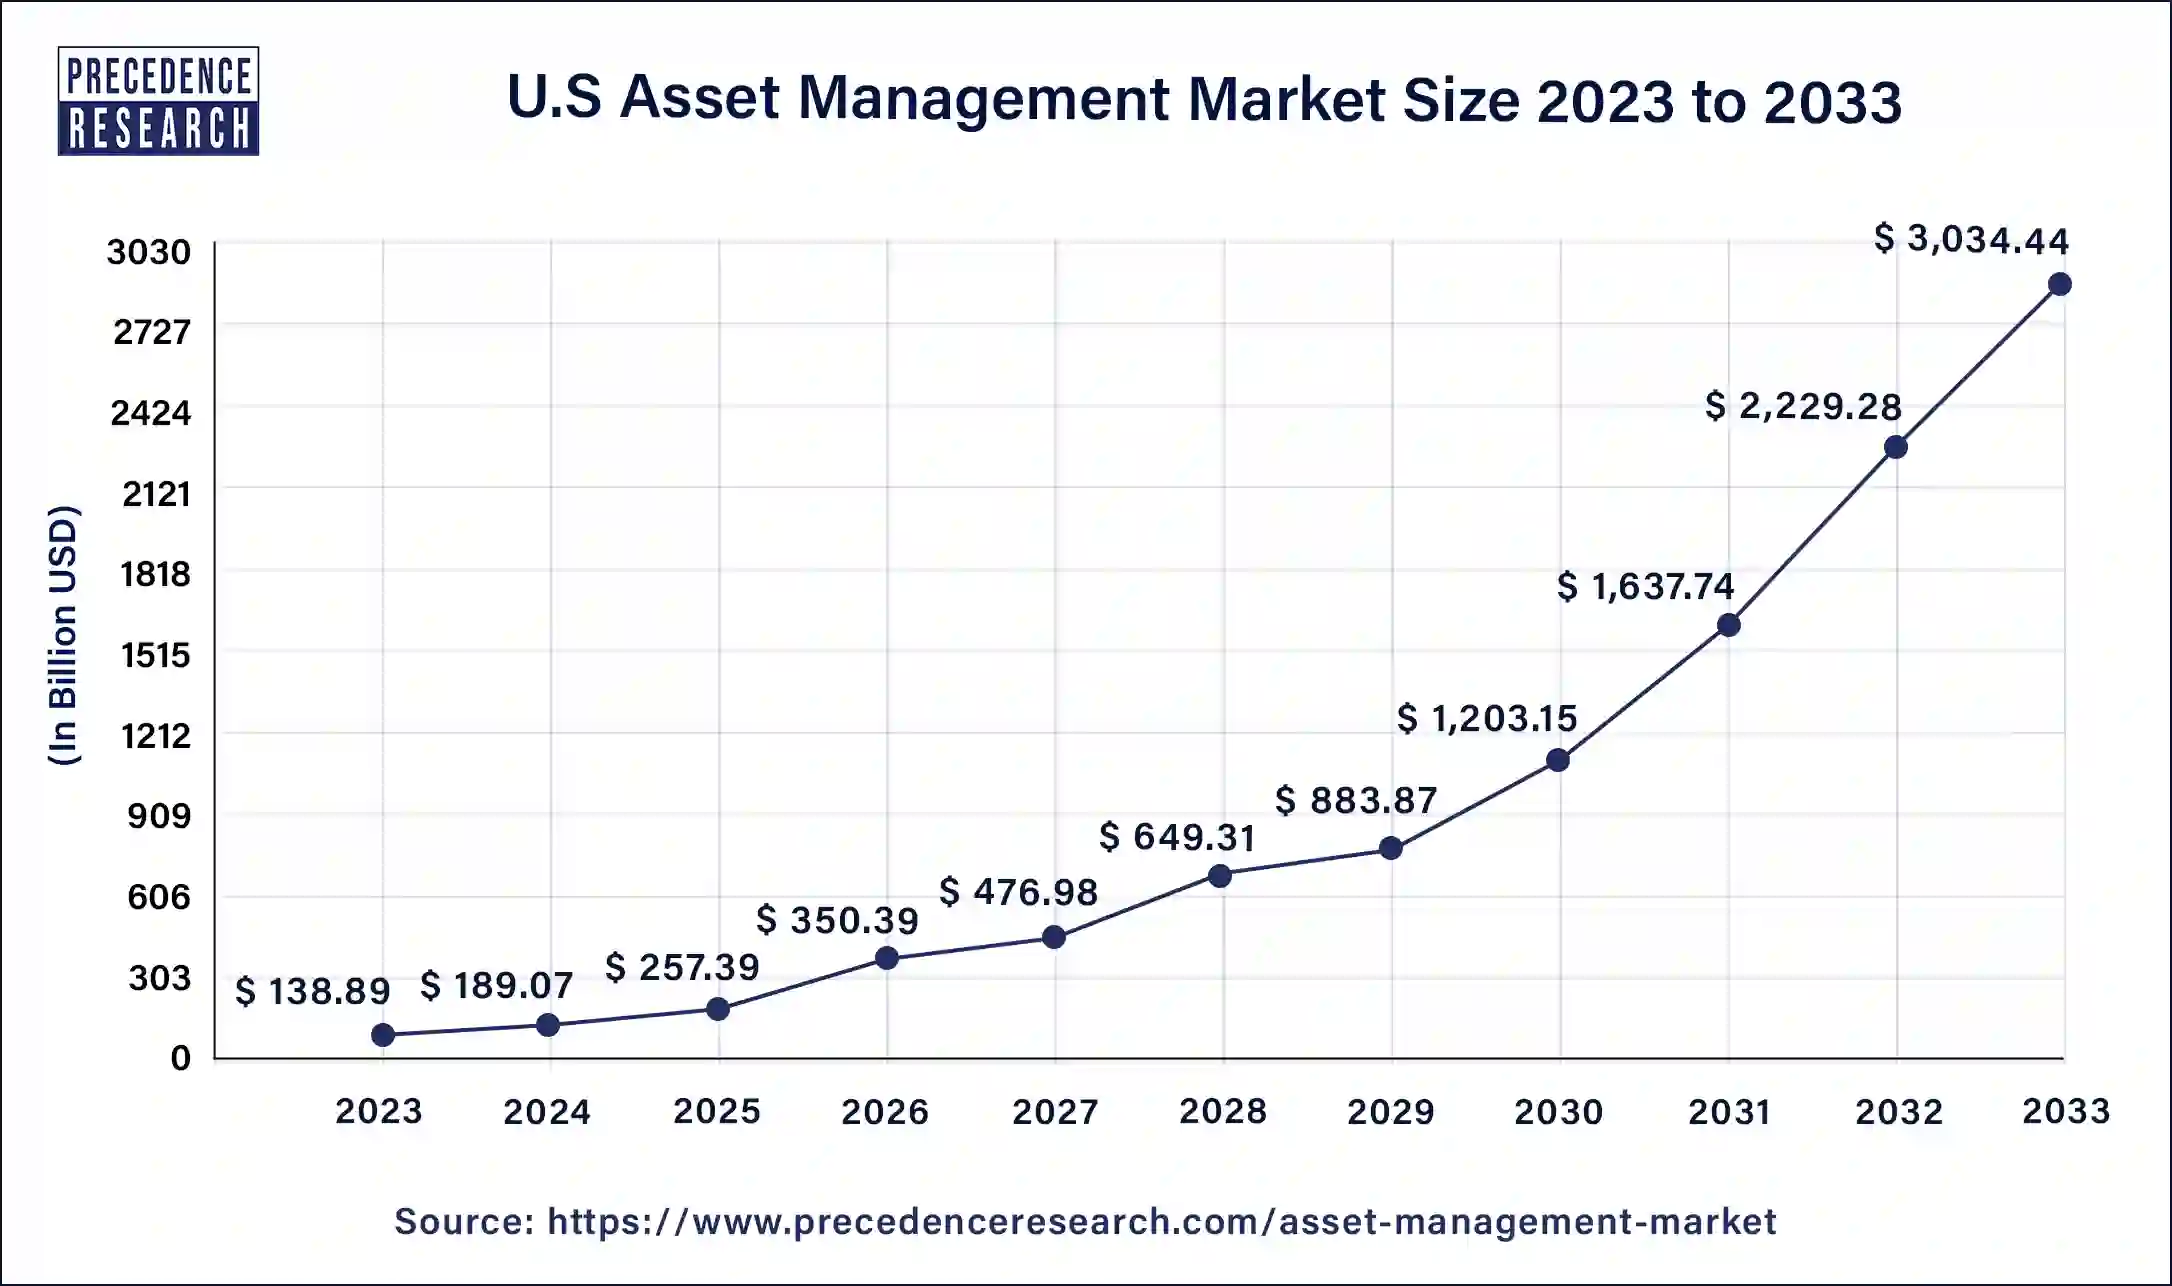 U.S. Asset Management Market Size 2024 to 2033